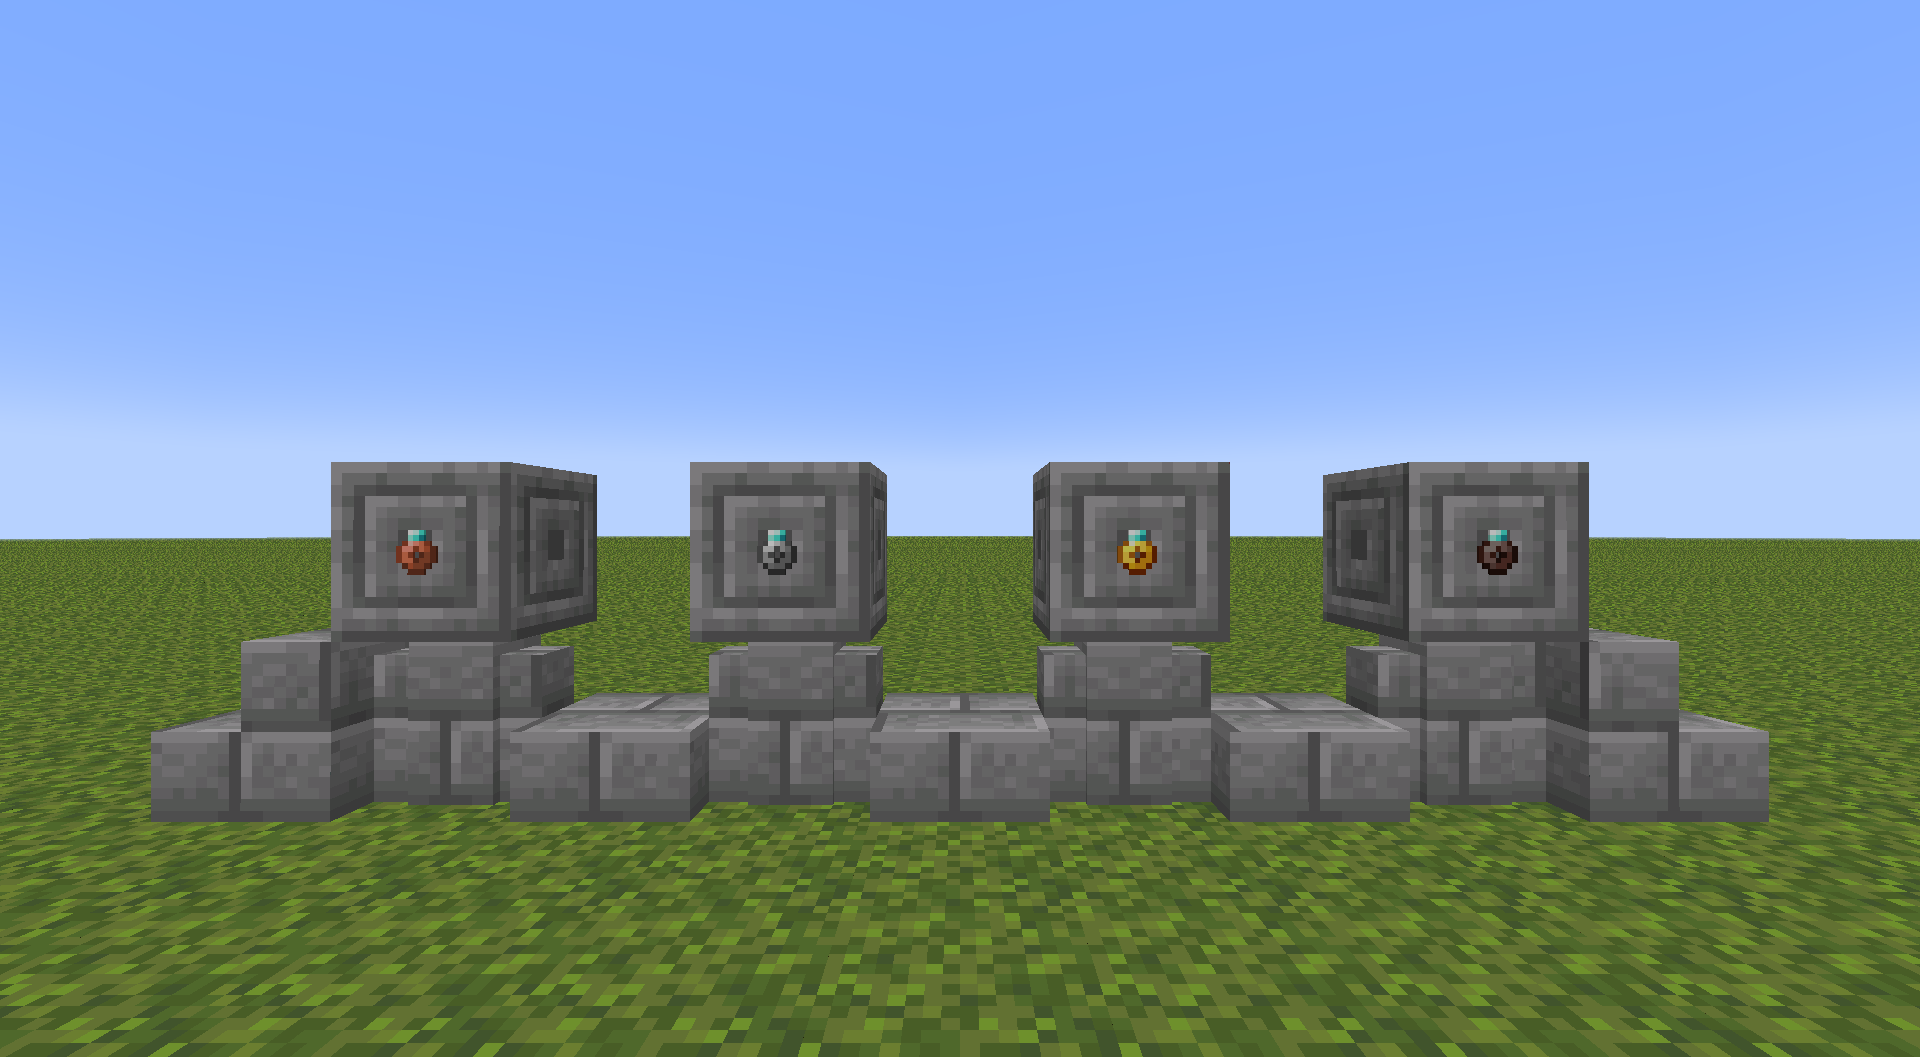 All four ring metal types sitting on stone pillars